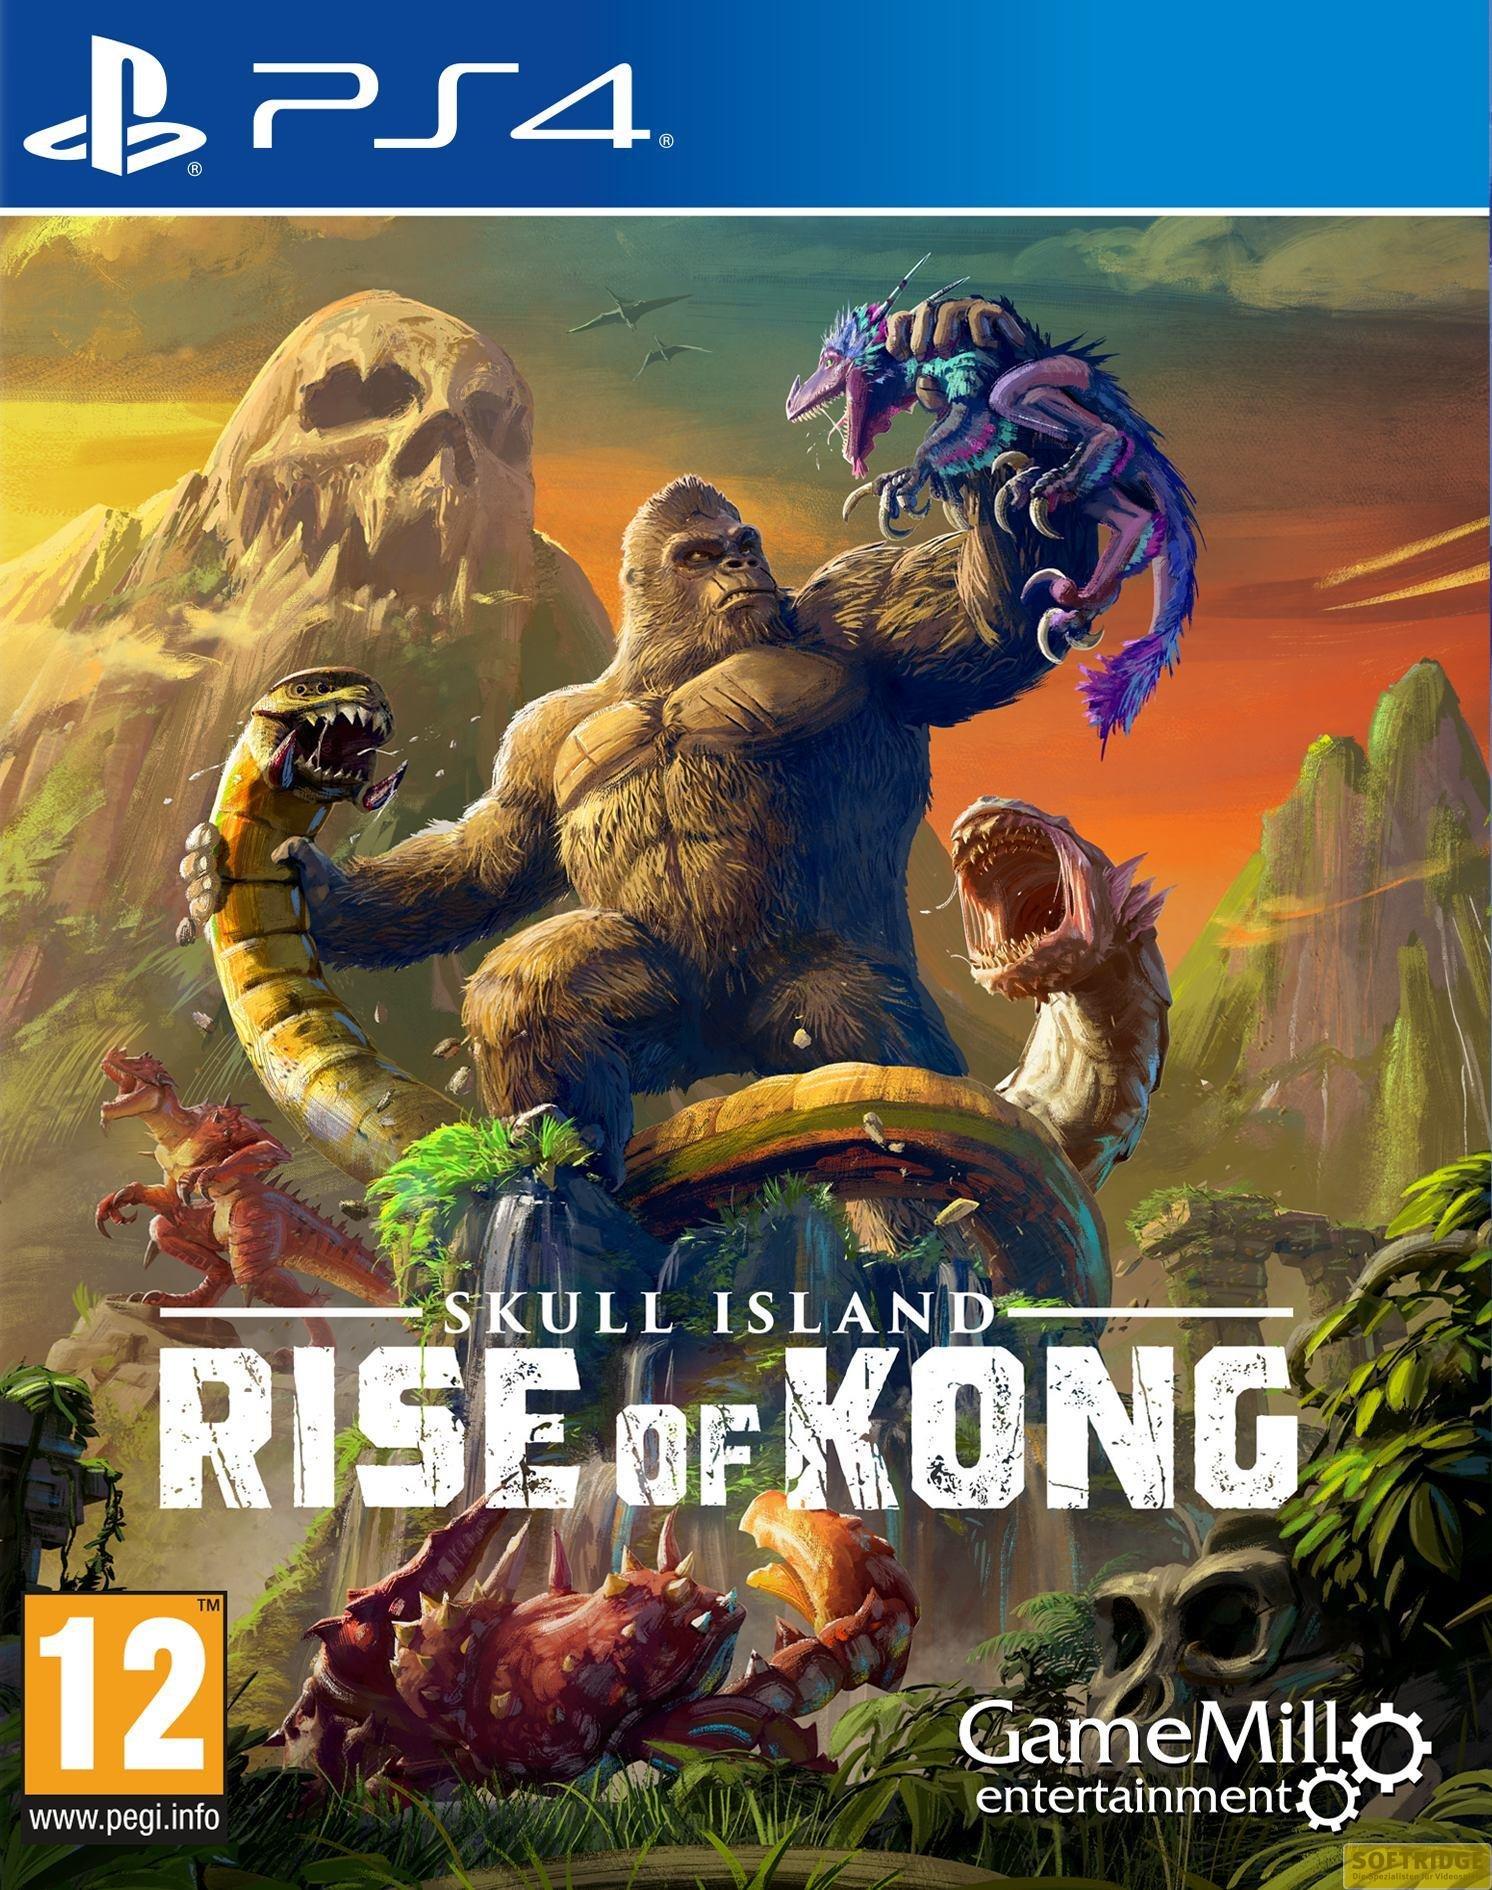 GameMill Entertainment  Skull Island: Rise of Kong 